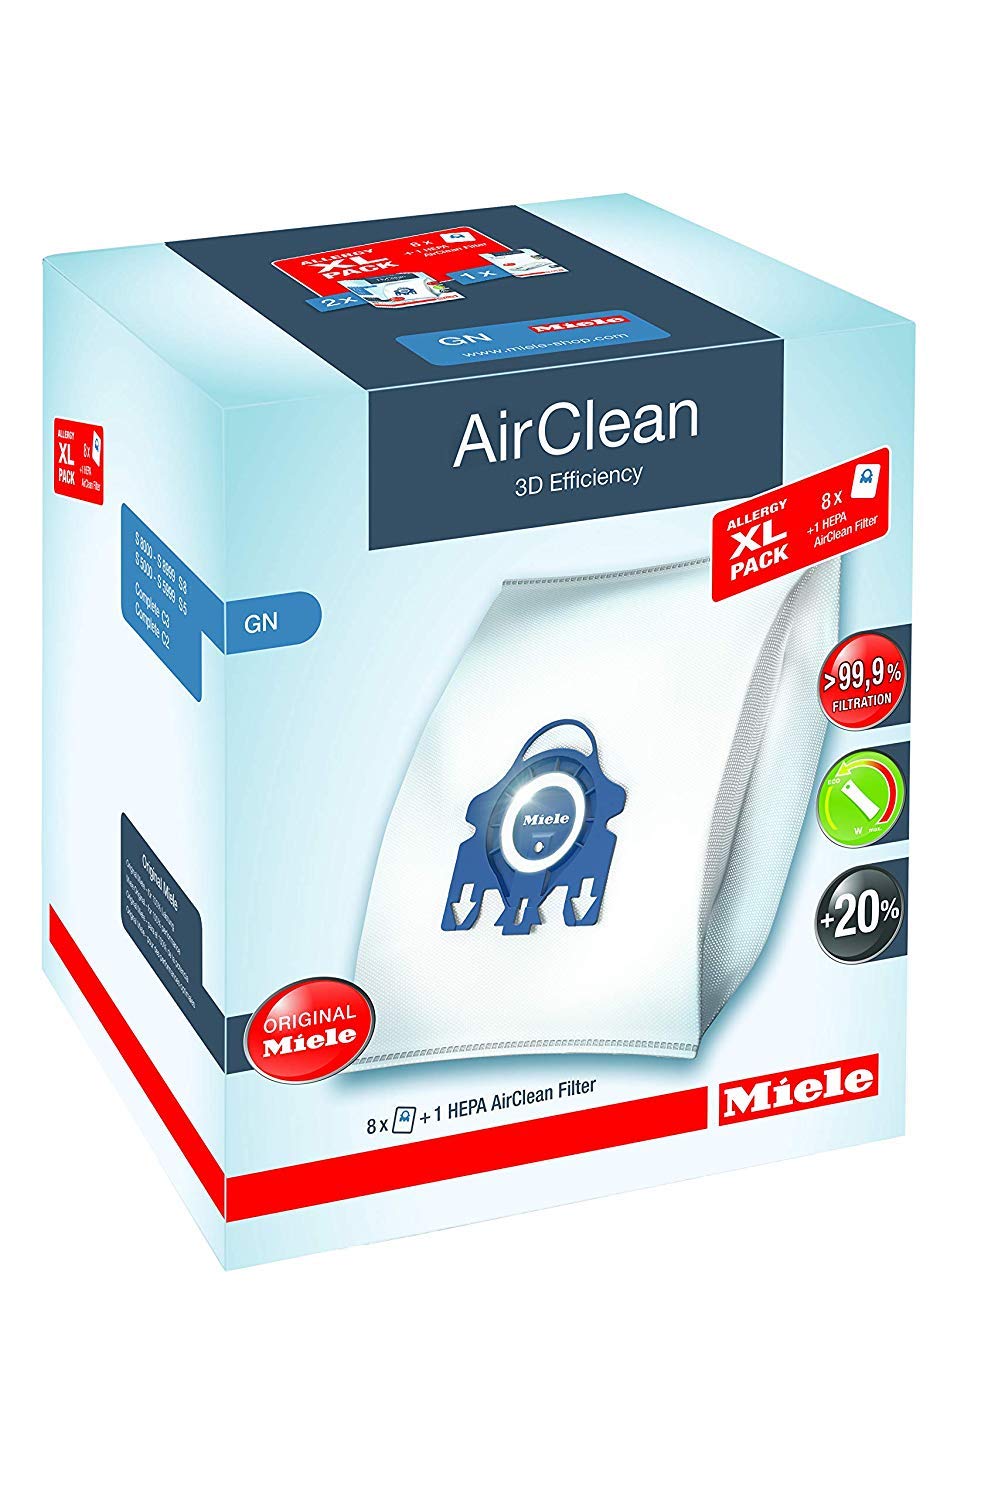 Miele AirClean 3D Efficiency Dust Bag, Type GN, Allergy...